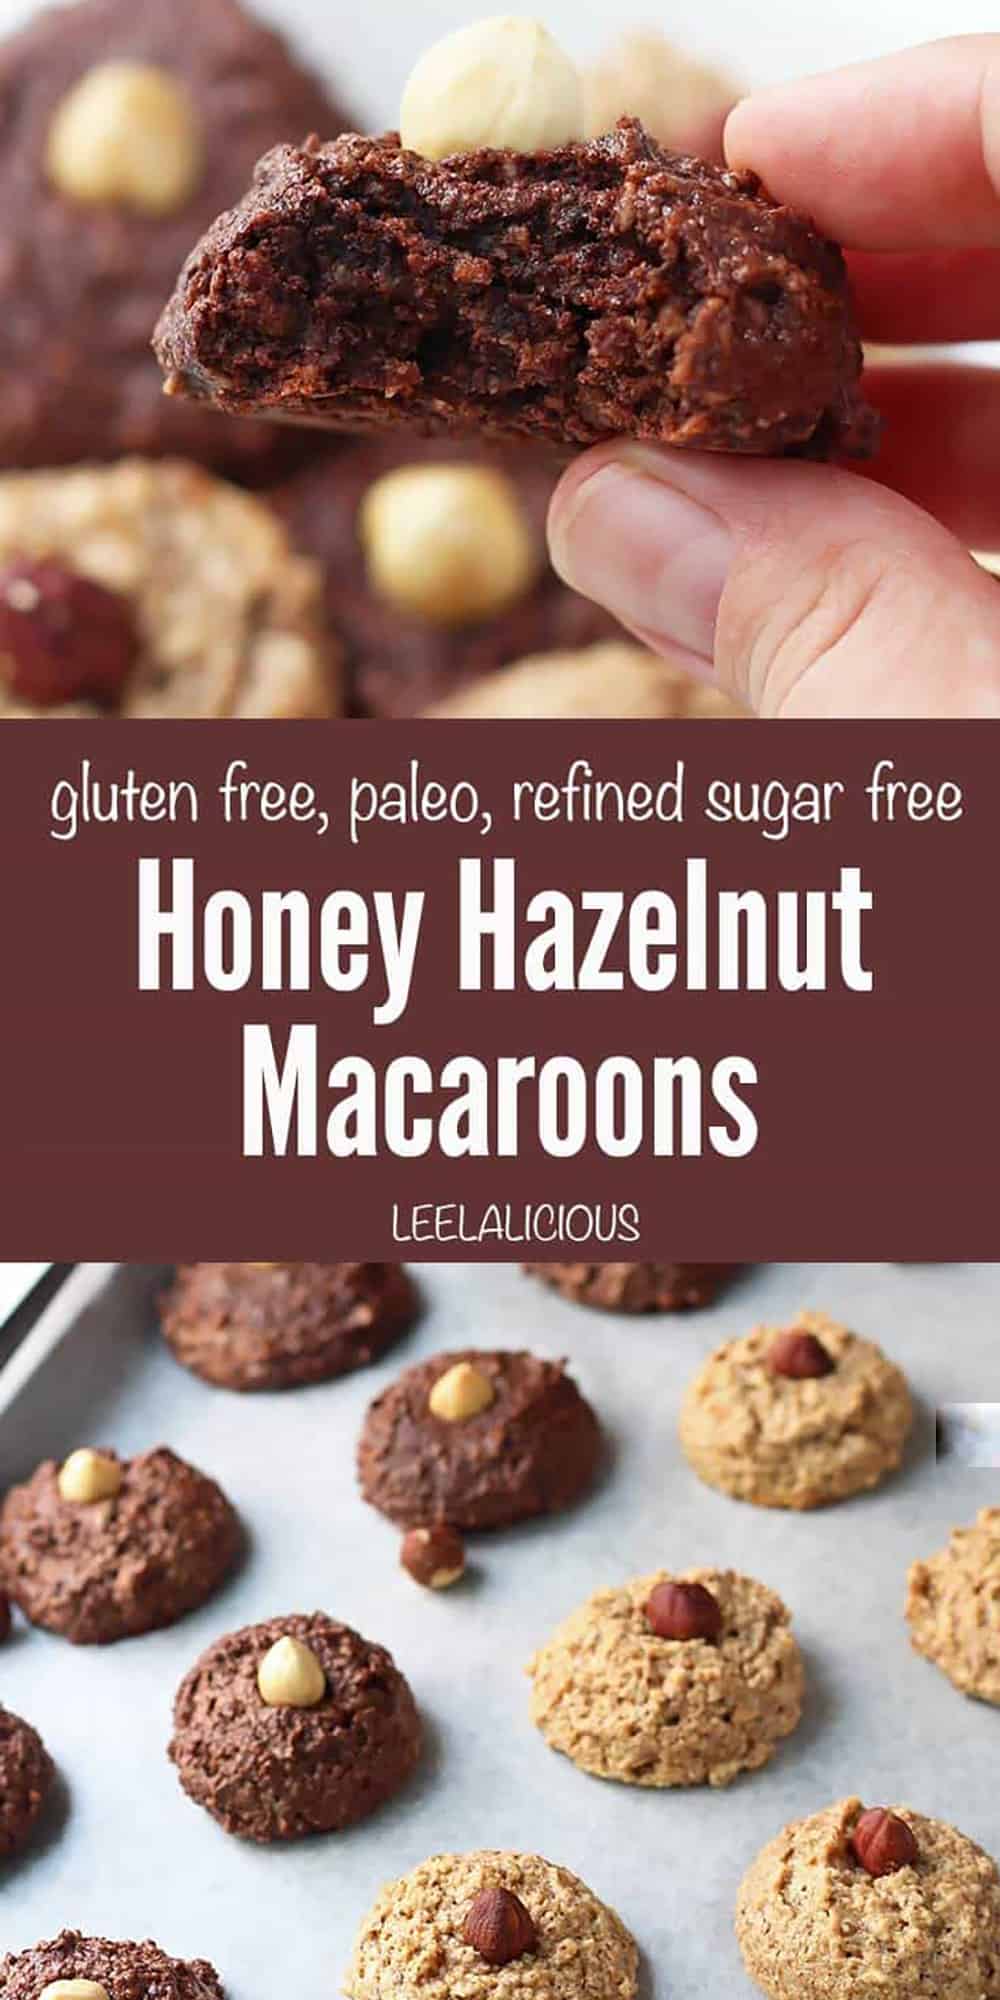 Honey Hazelnut Macaroons